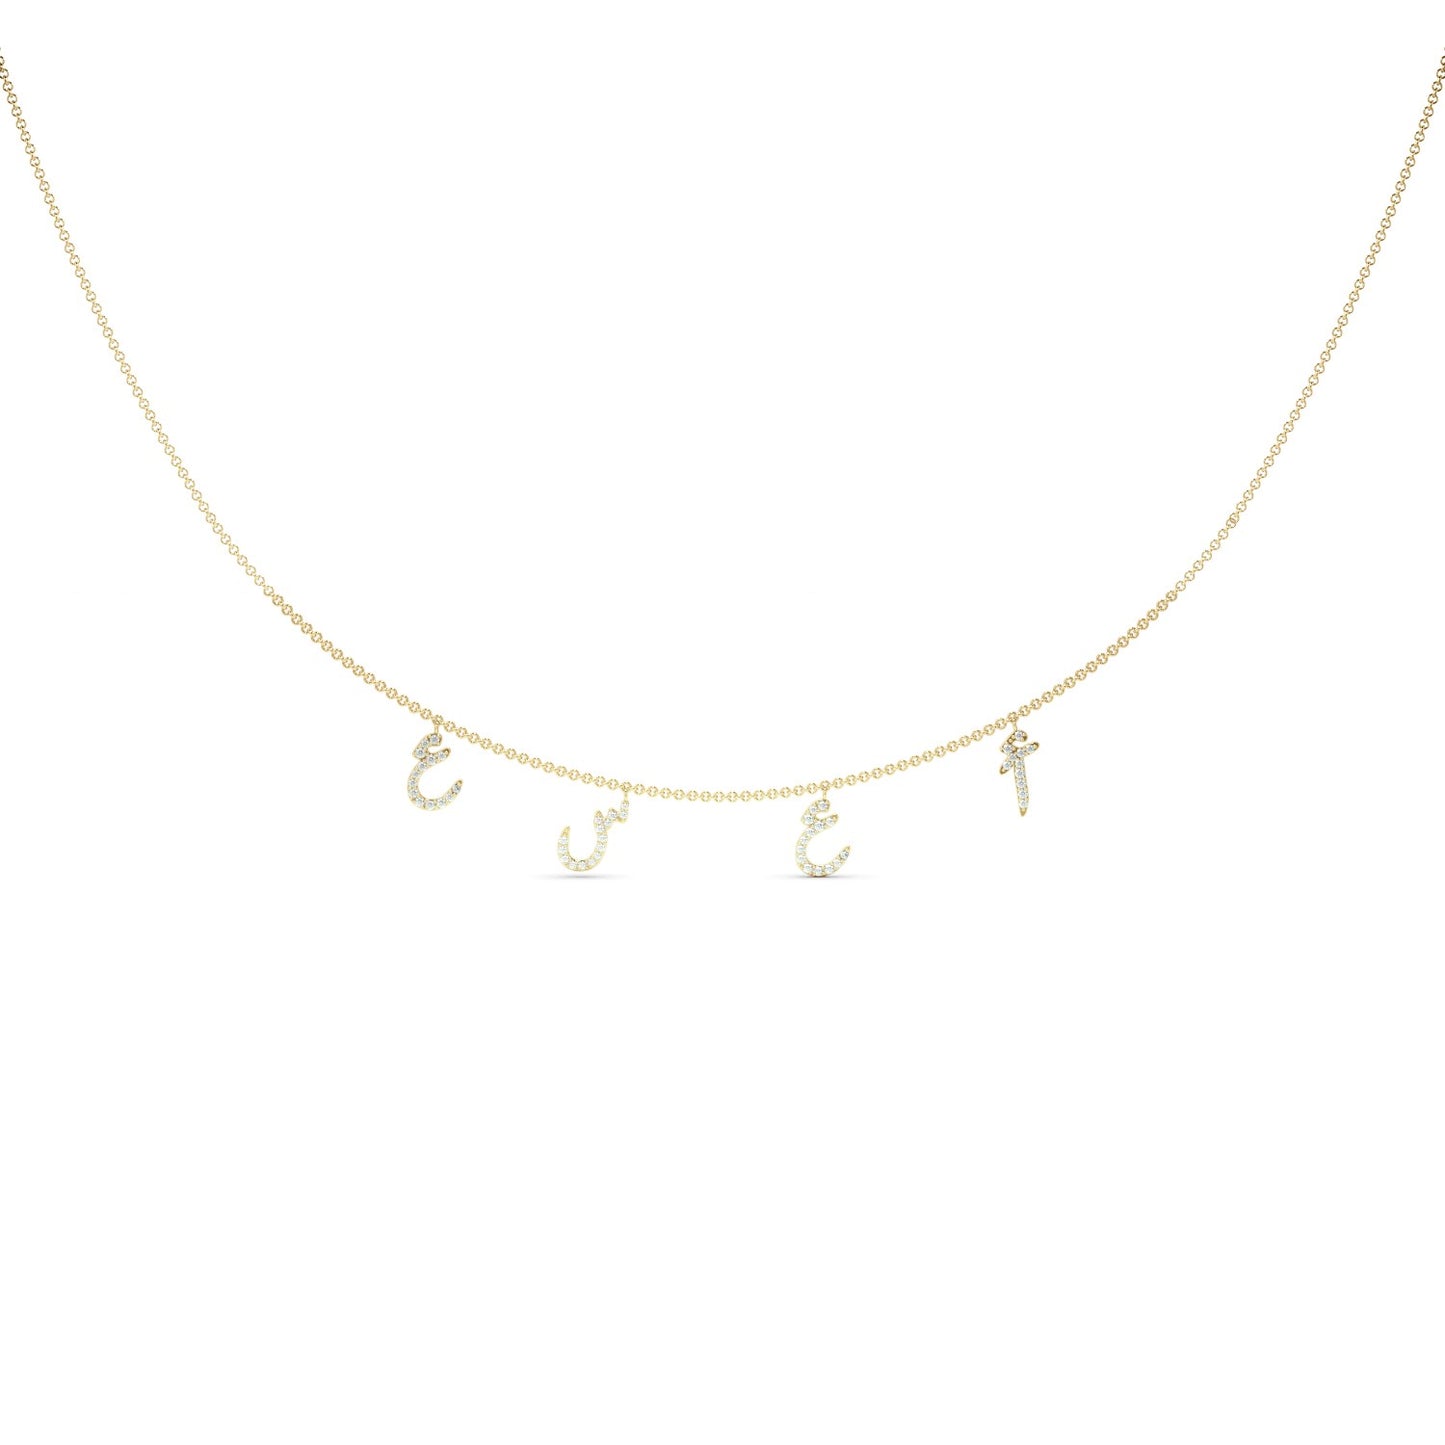 Customize your 4-Letter Pavé Diamond Necklace